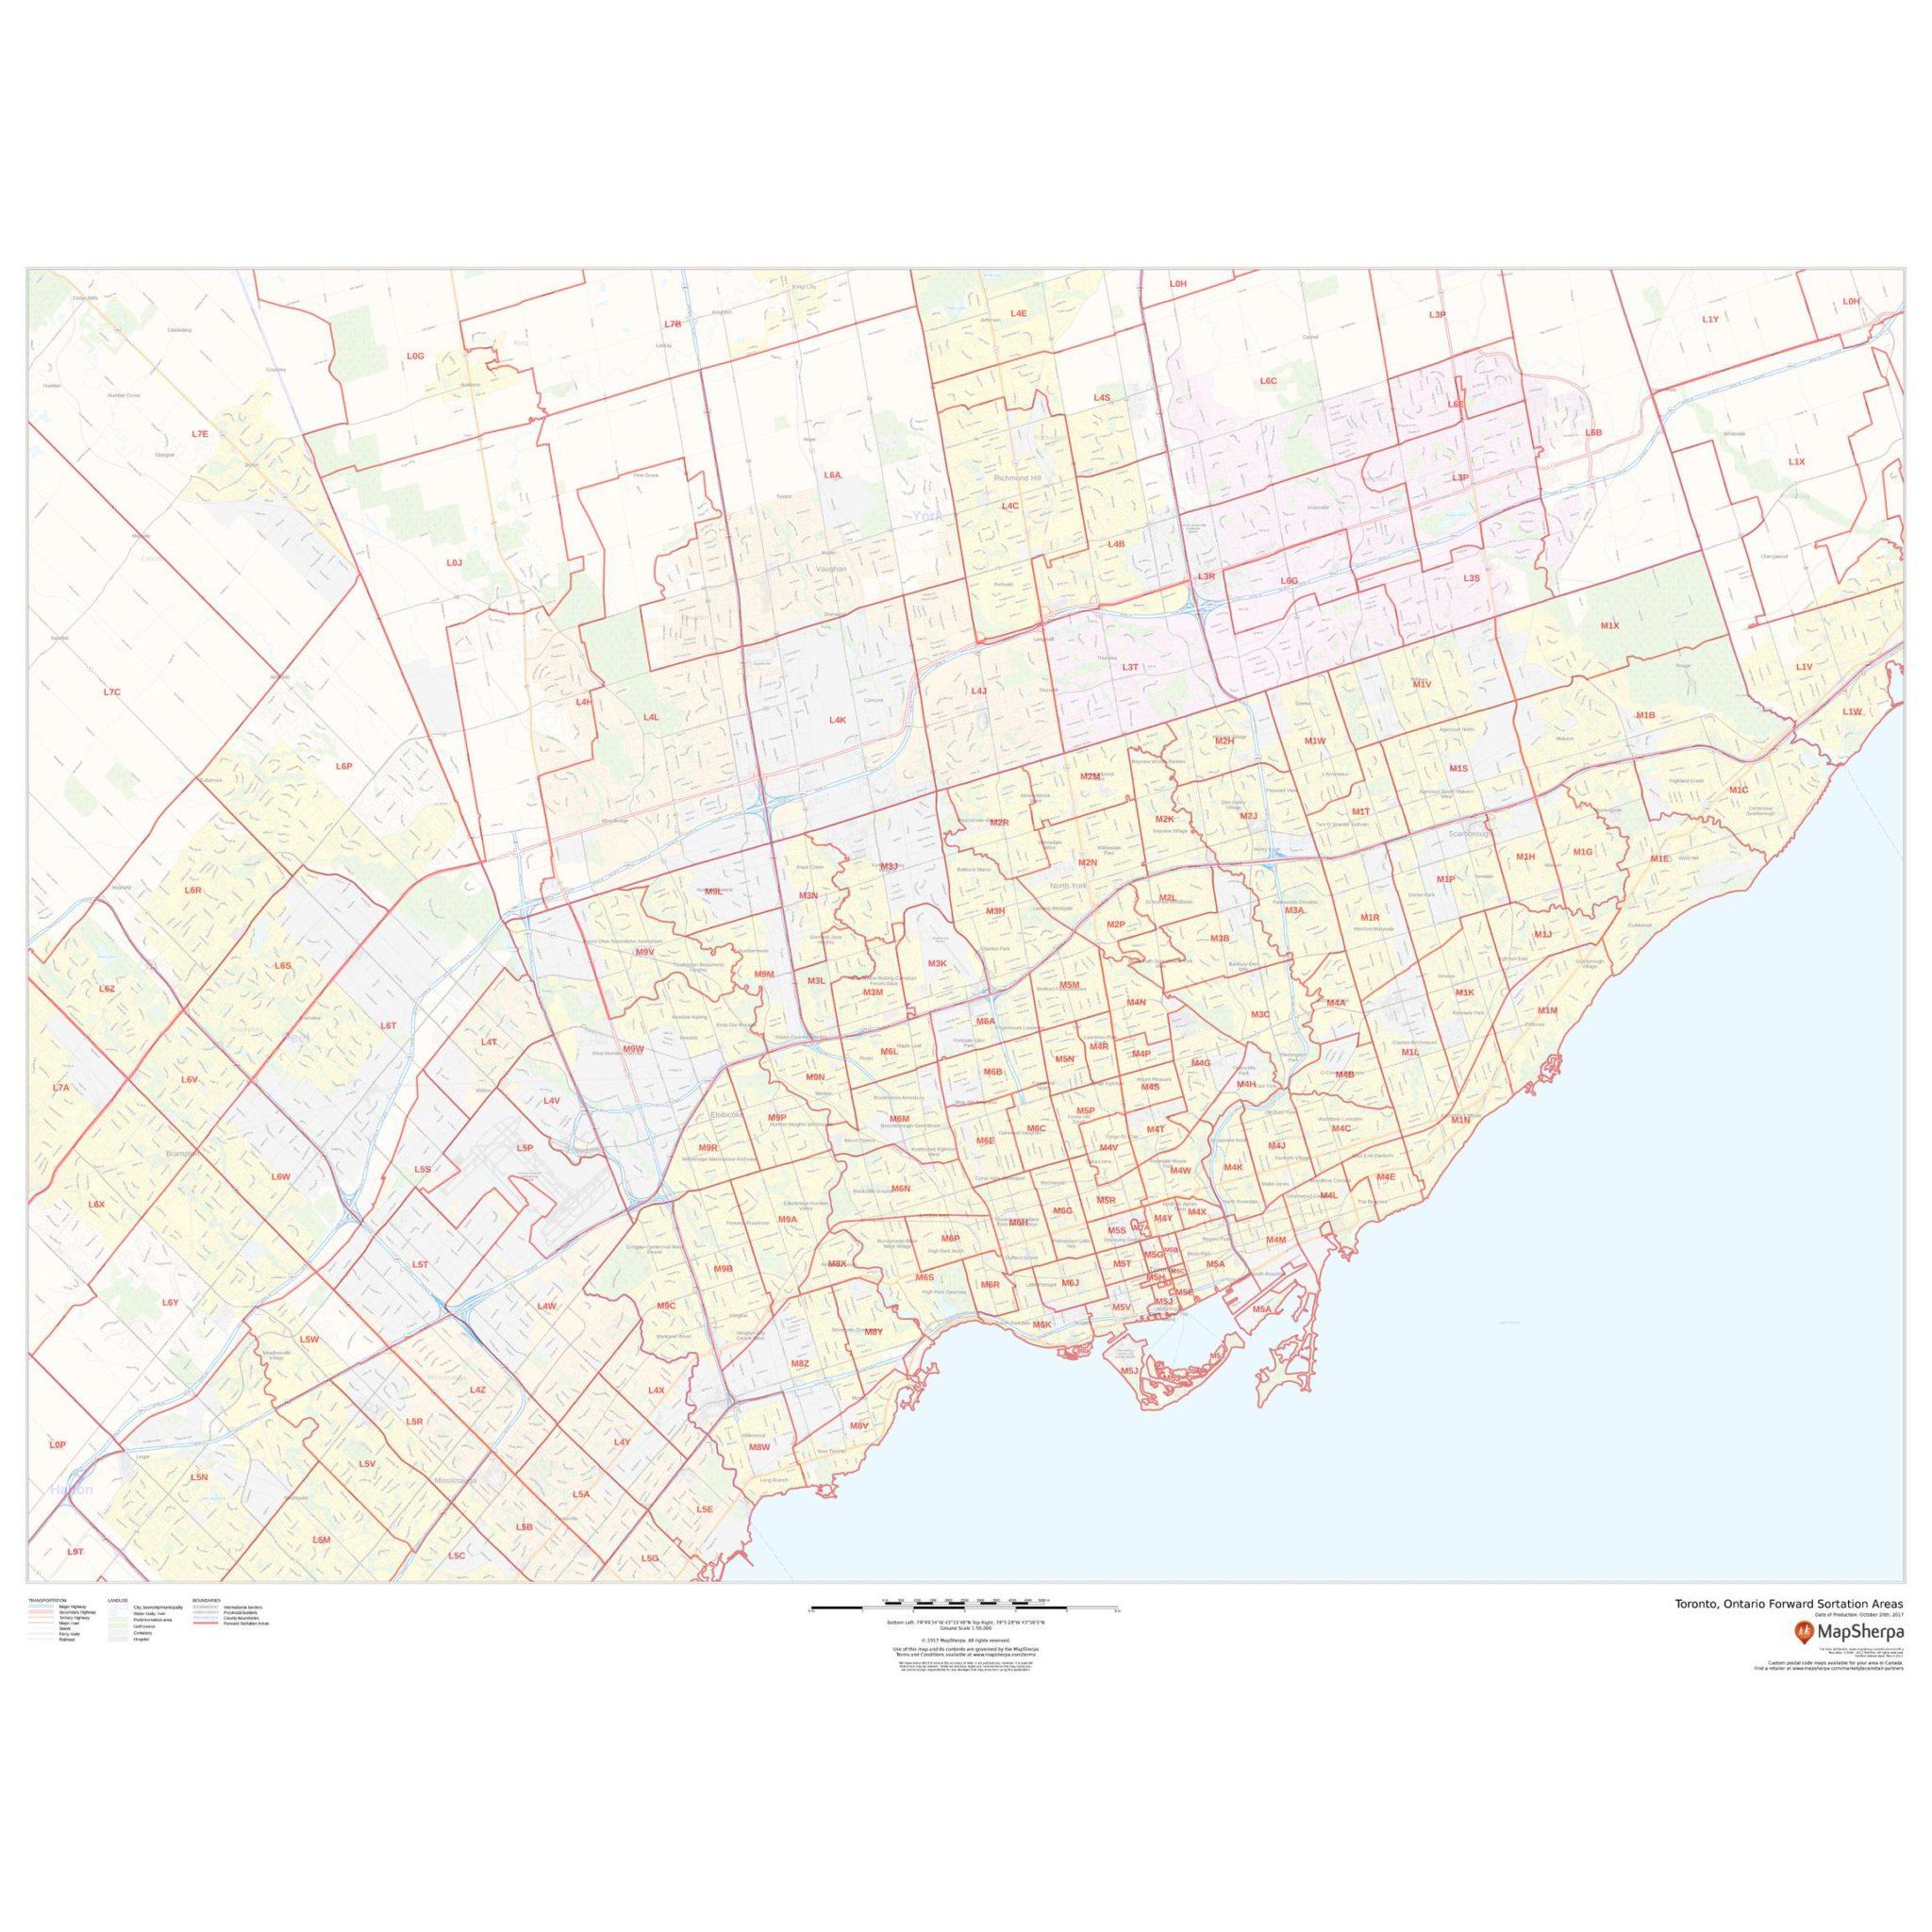 Pickering Postal Code Map Toronto, Ontario Postal Code Forward Sortation Areas - The Map Shop